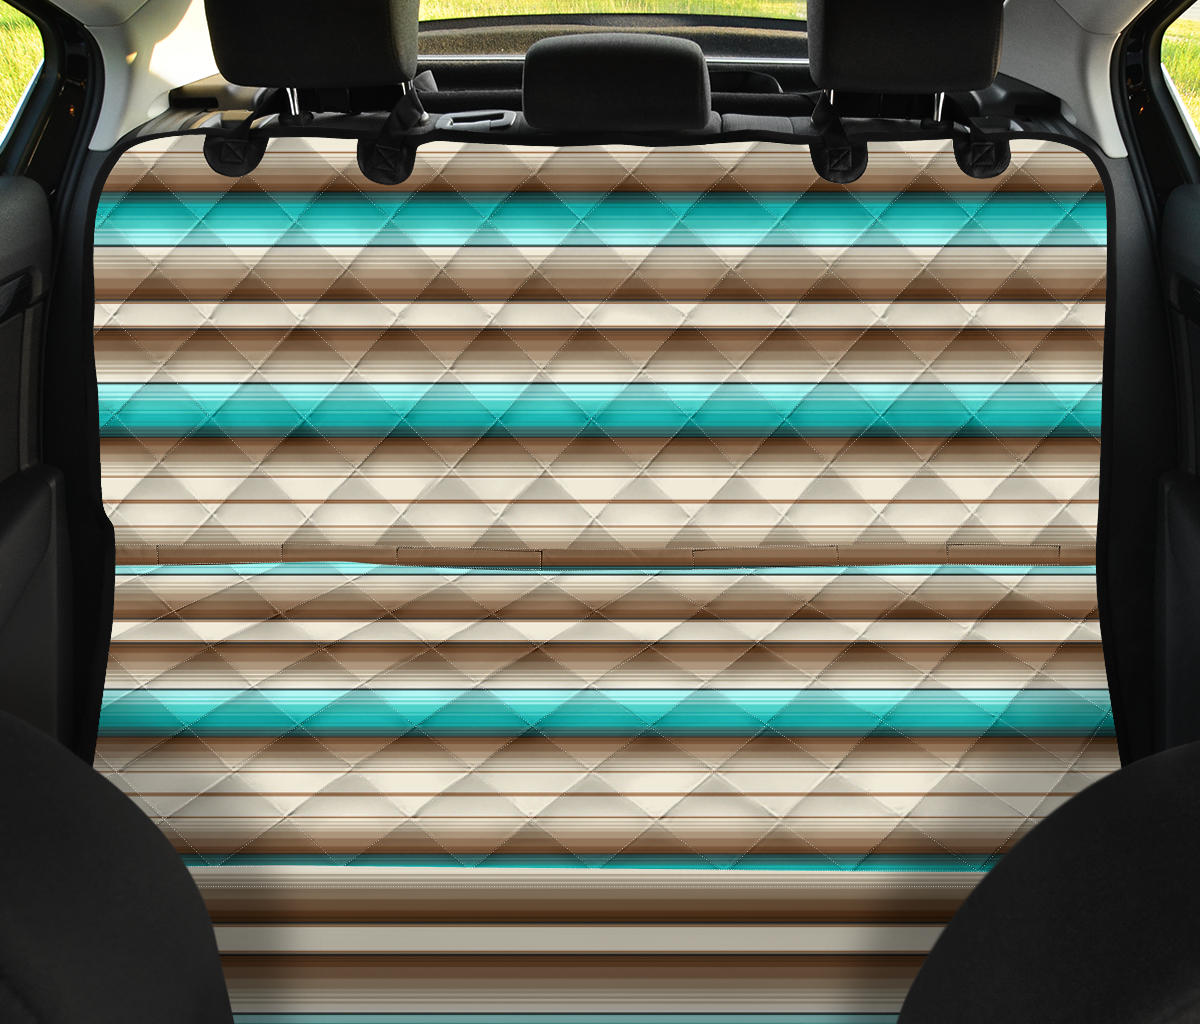 turquoise serape car seat cover, striped pet seat cover, Southwestern, Baja